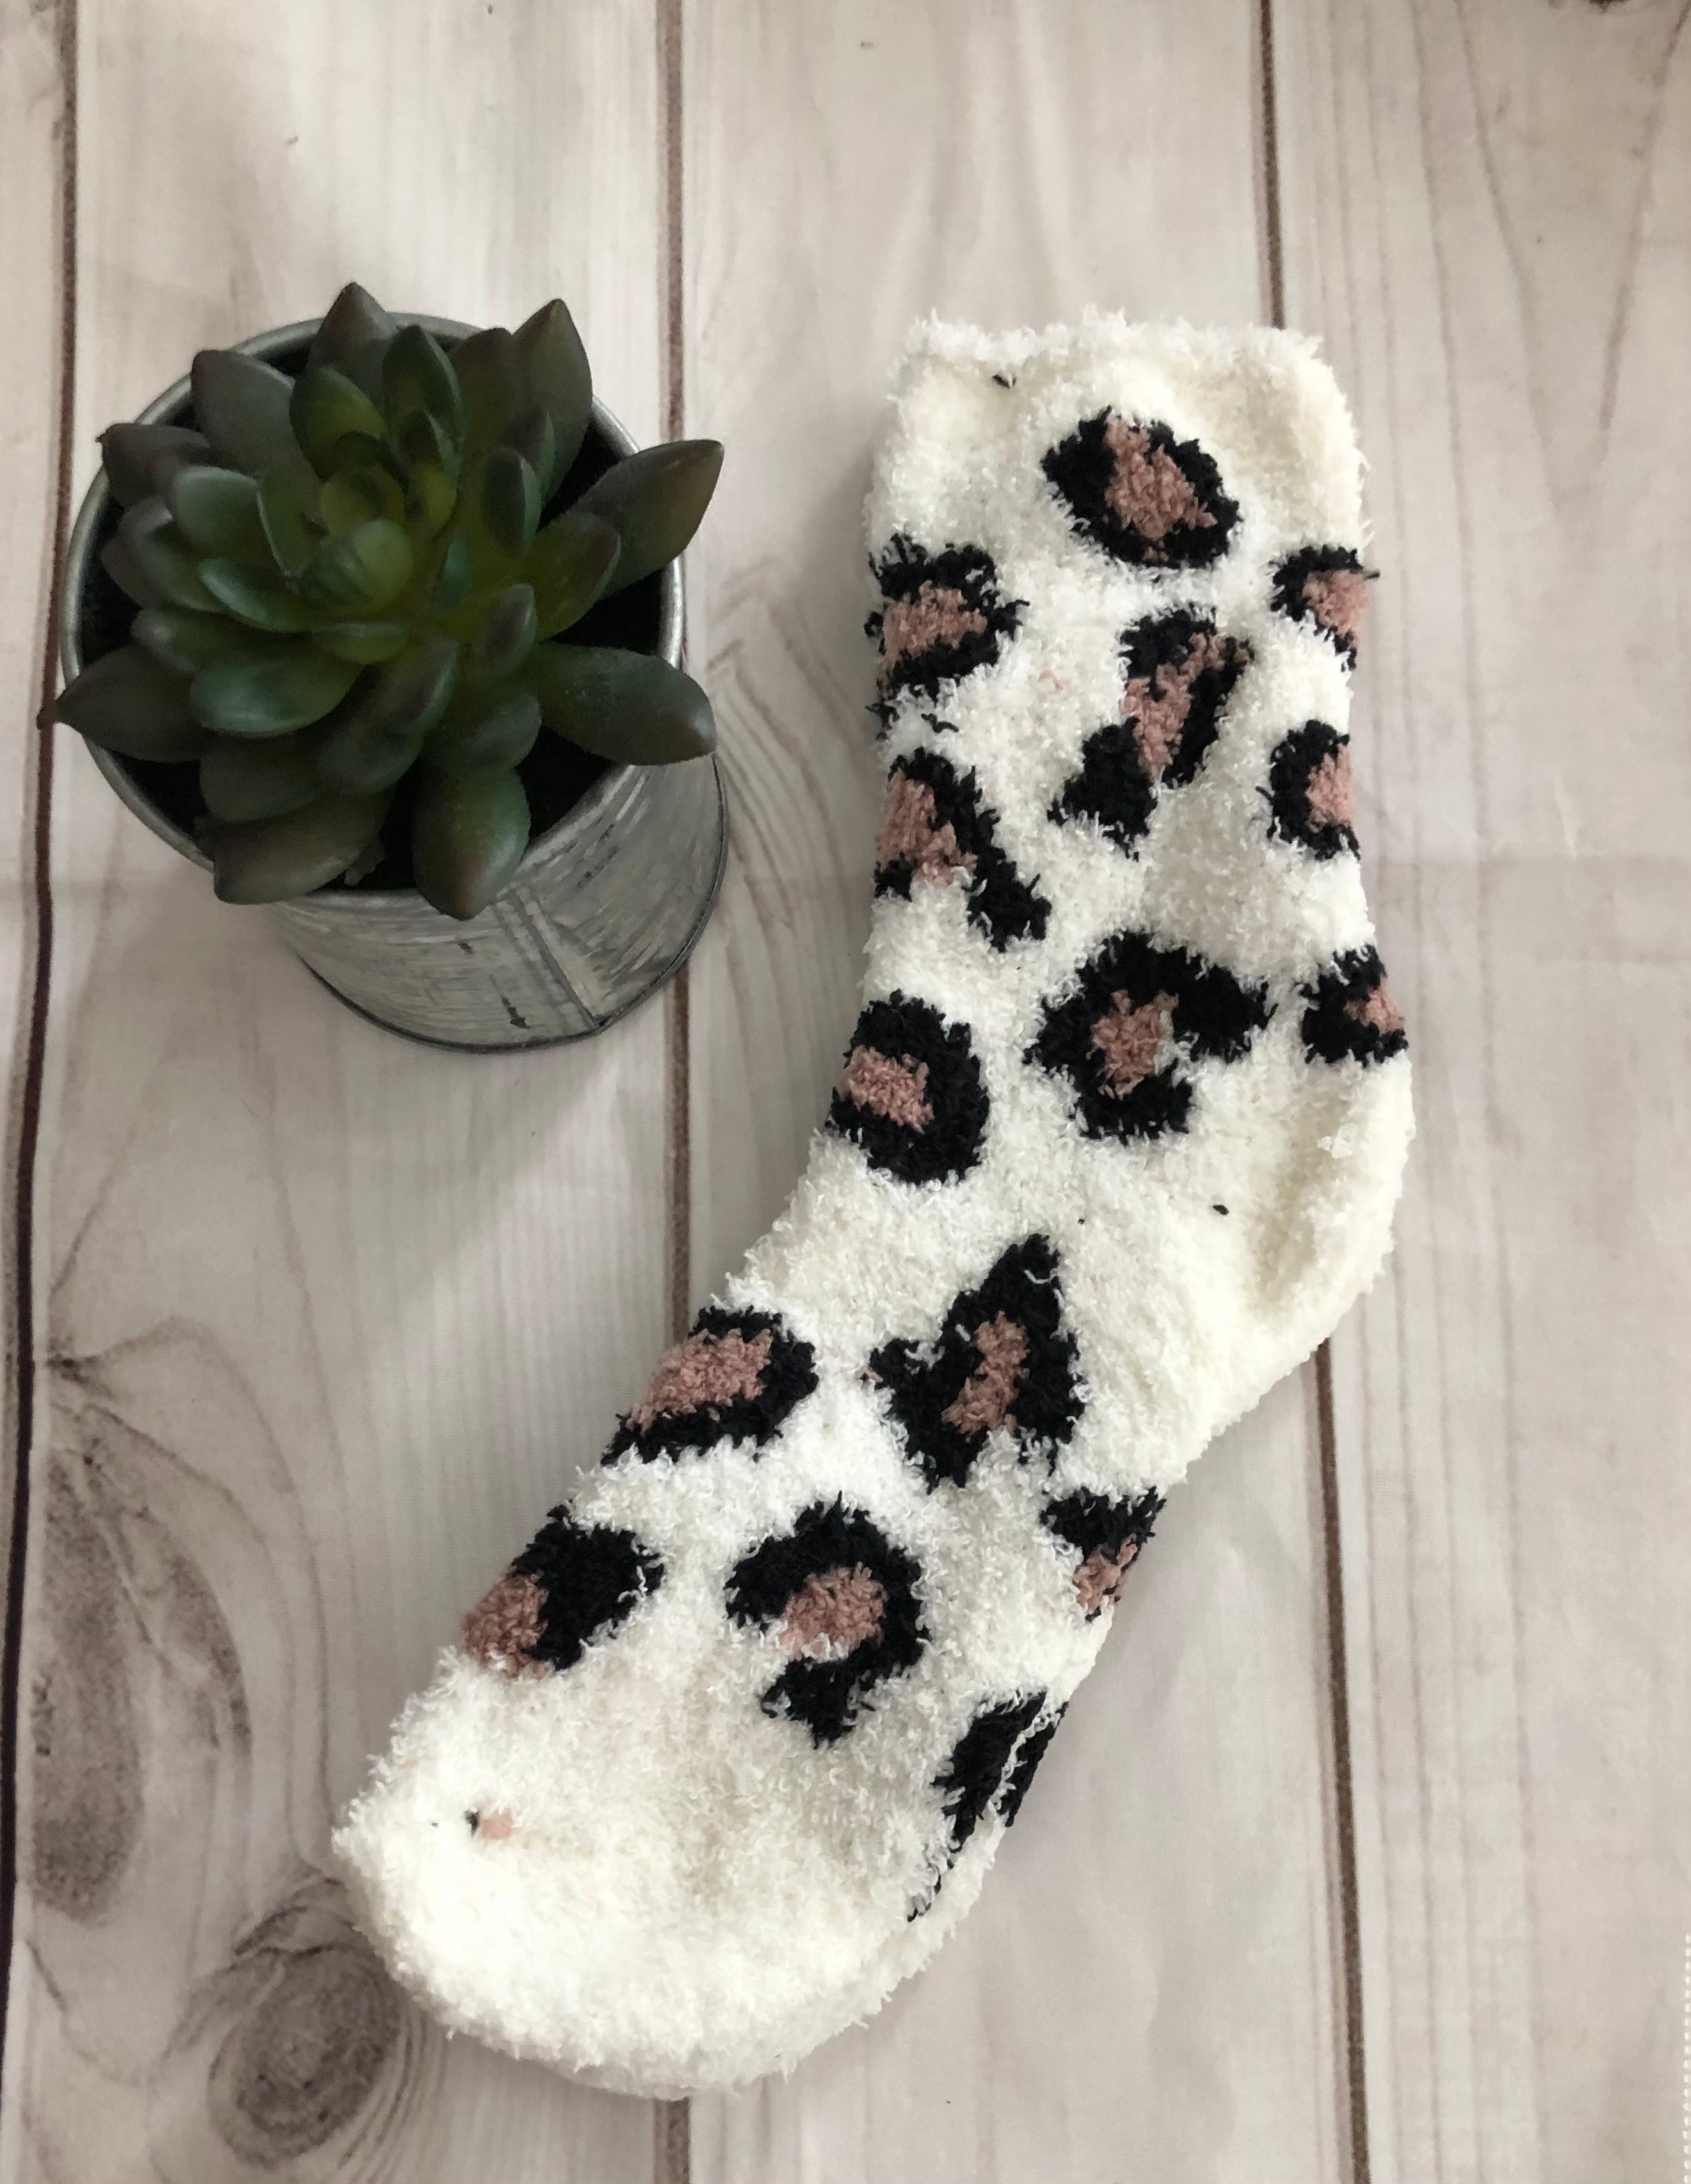 Fuzzy leopard socks